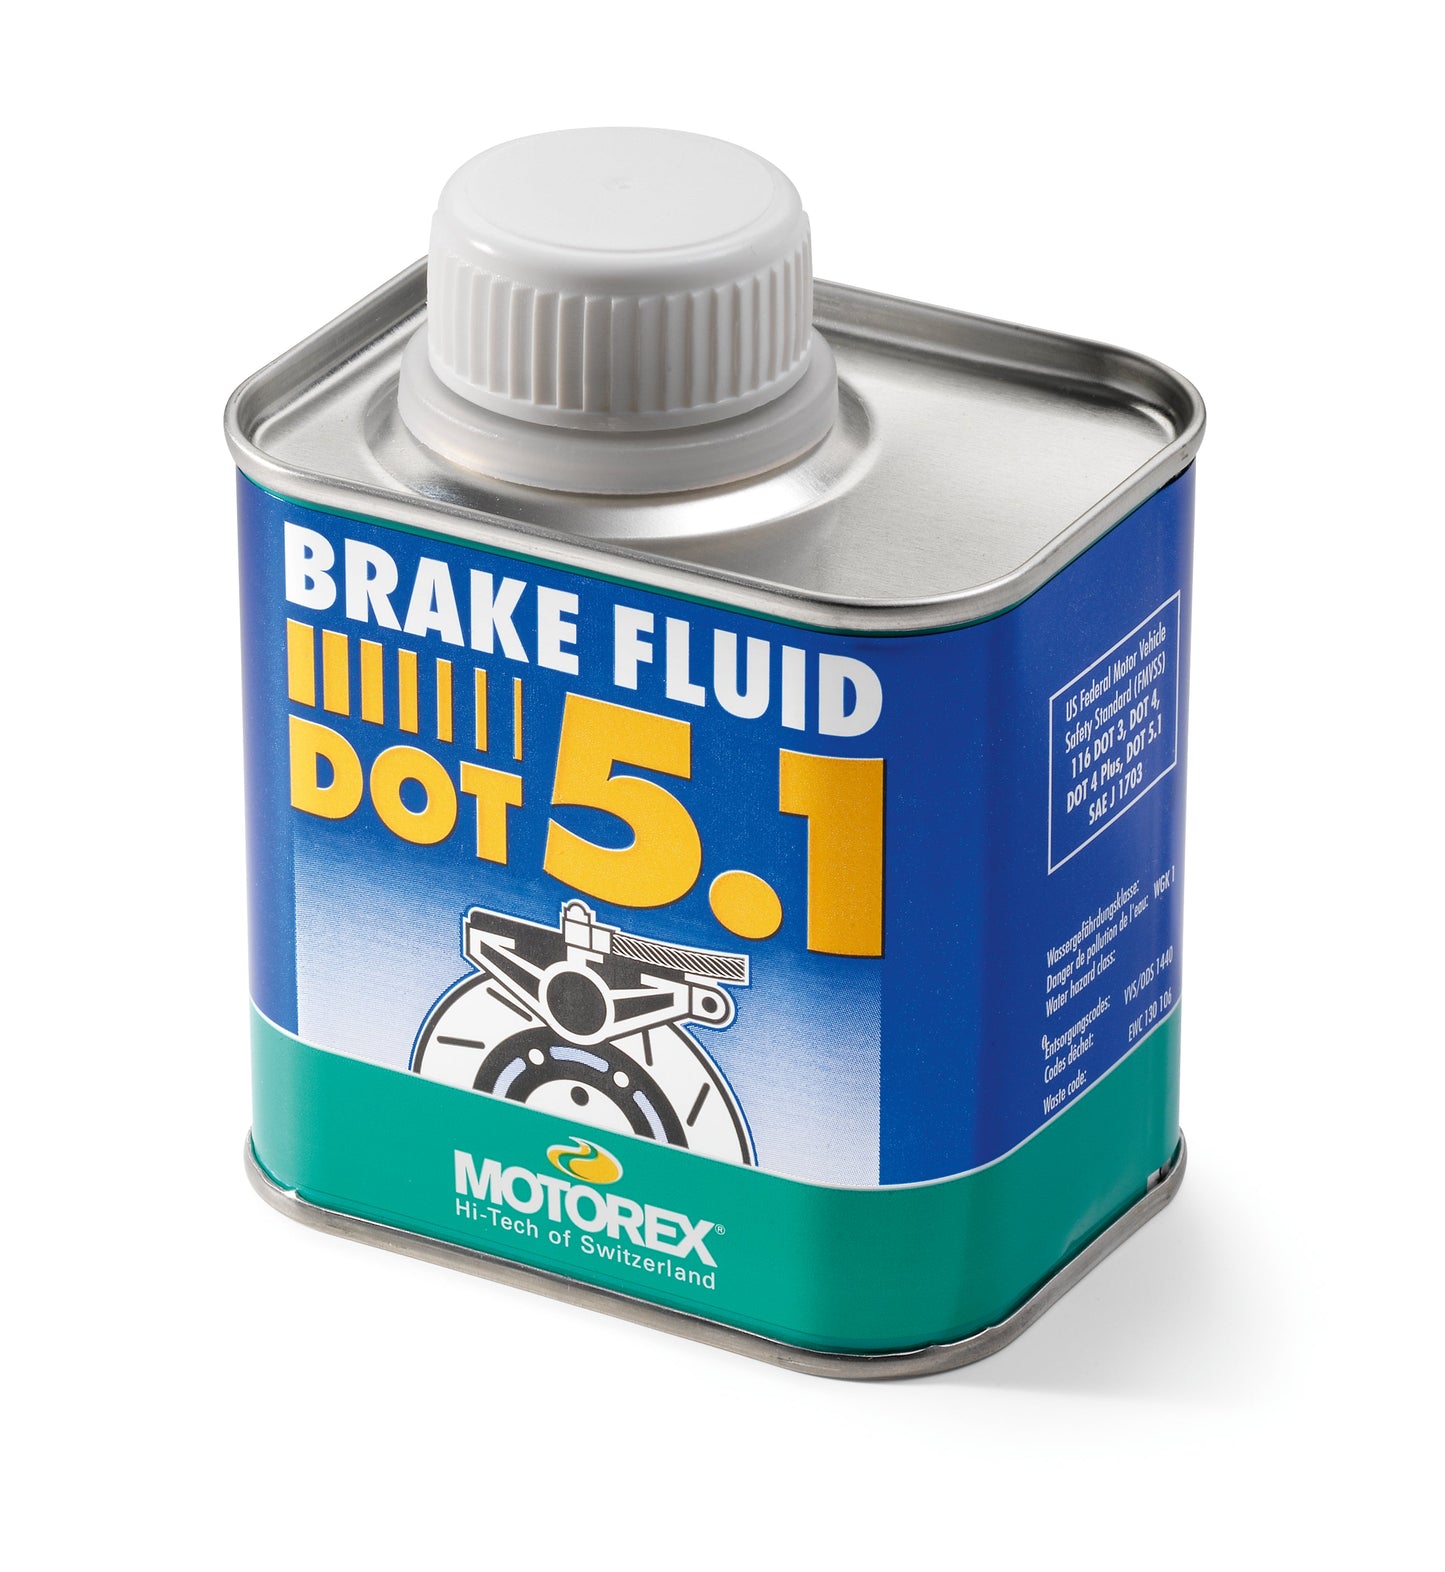 MOTOREX brake fluid 5.1